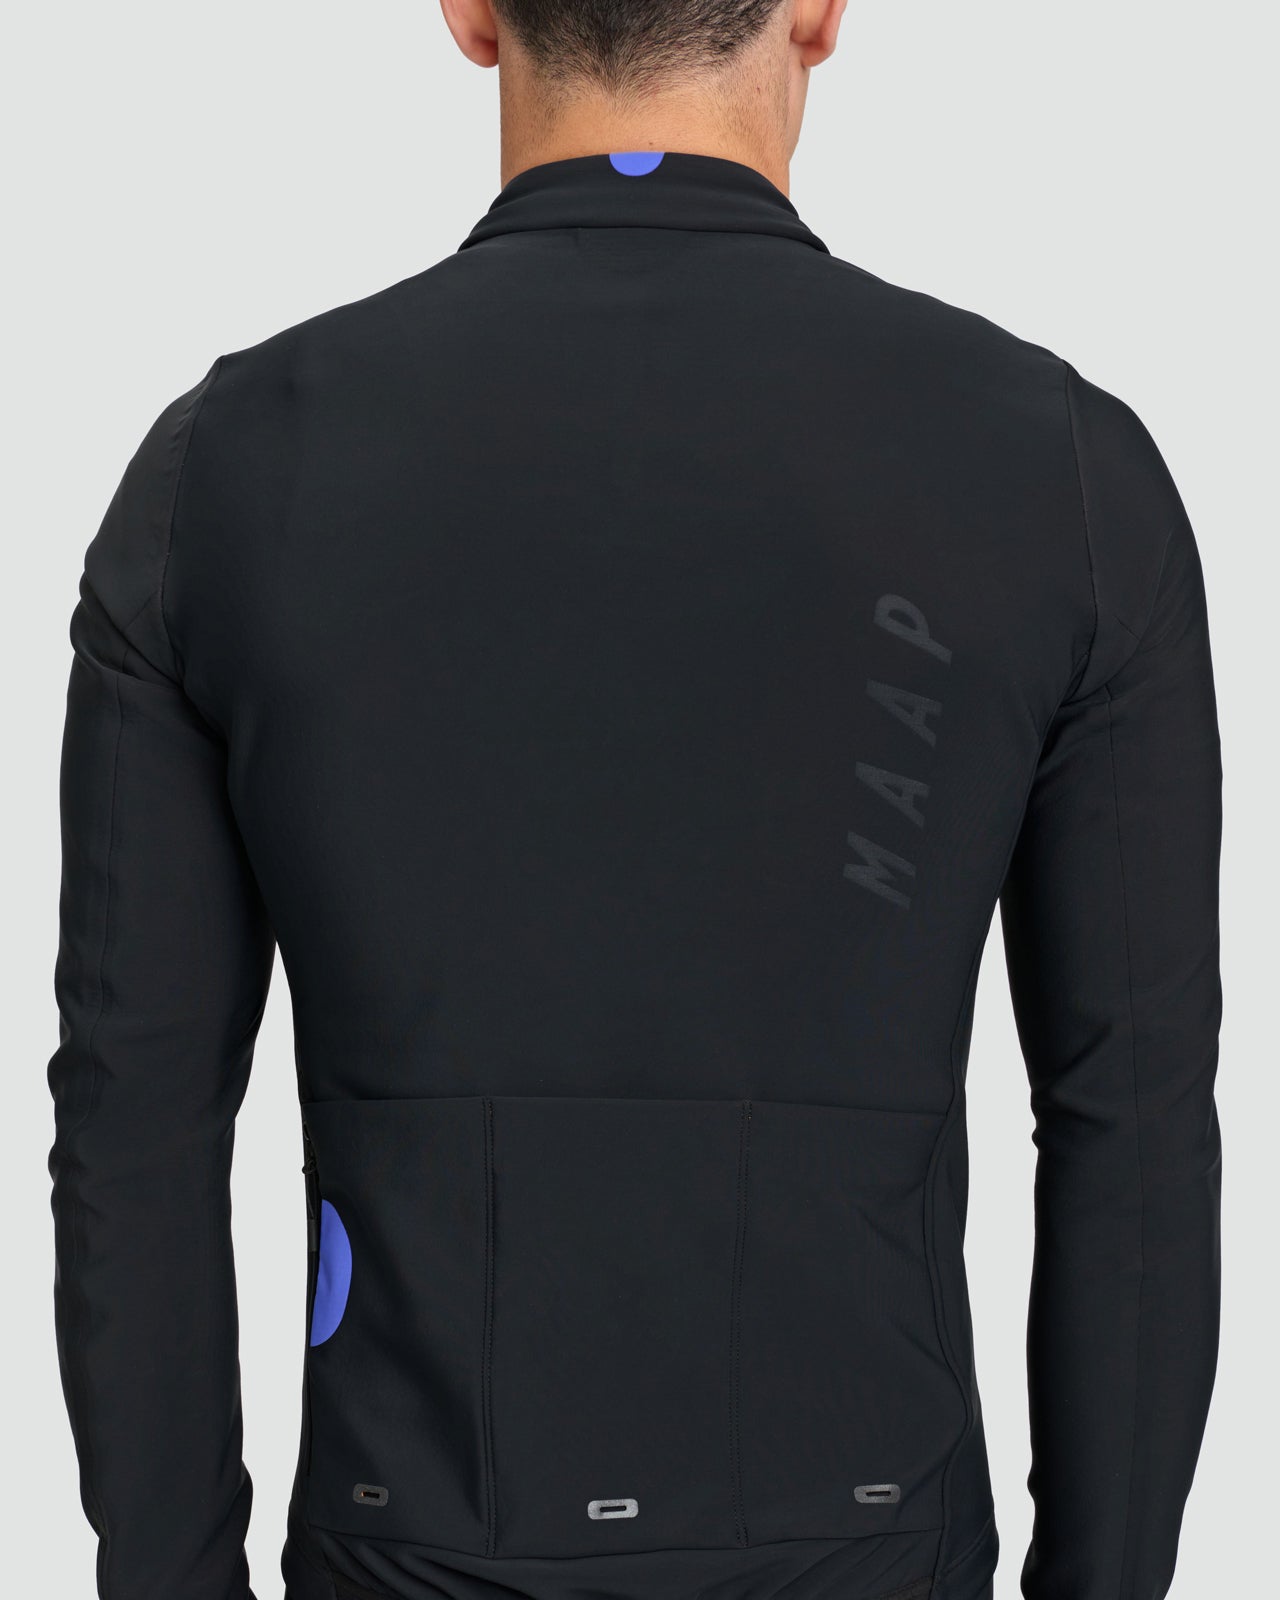 Apex Winter Jacket 2.0 - MAAP Cycling Apparel